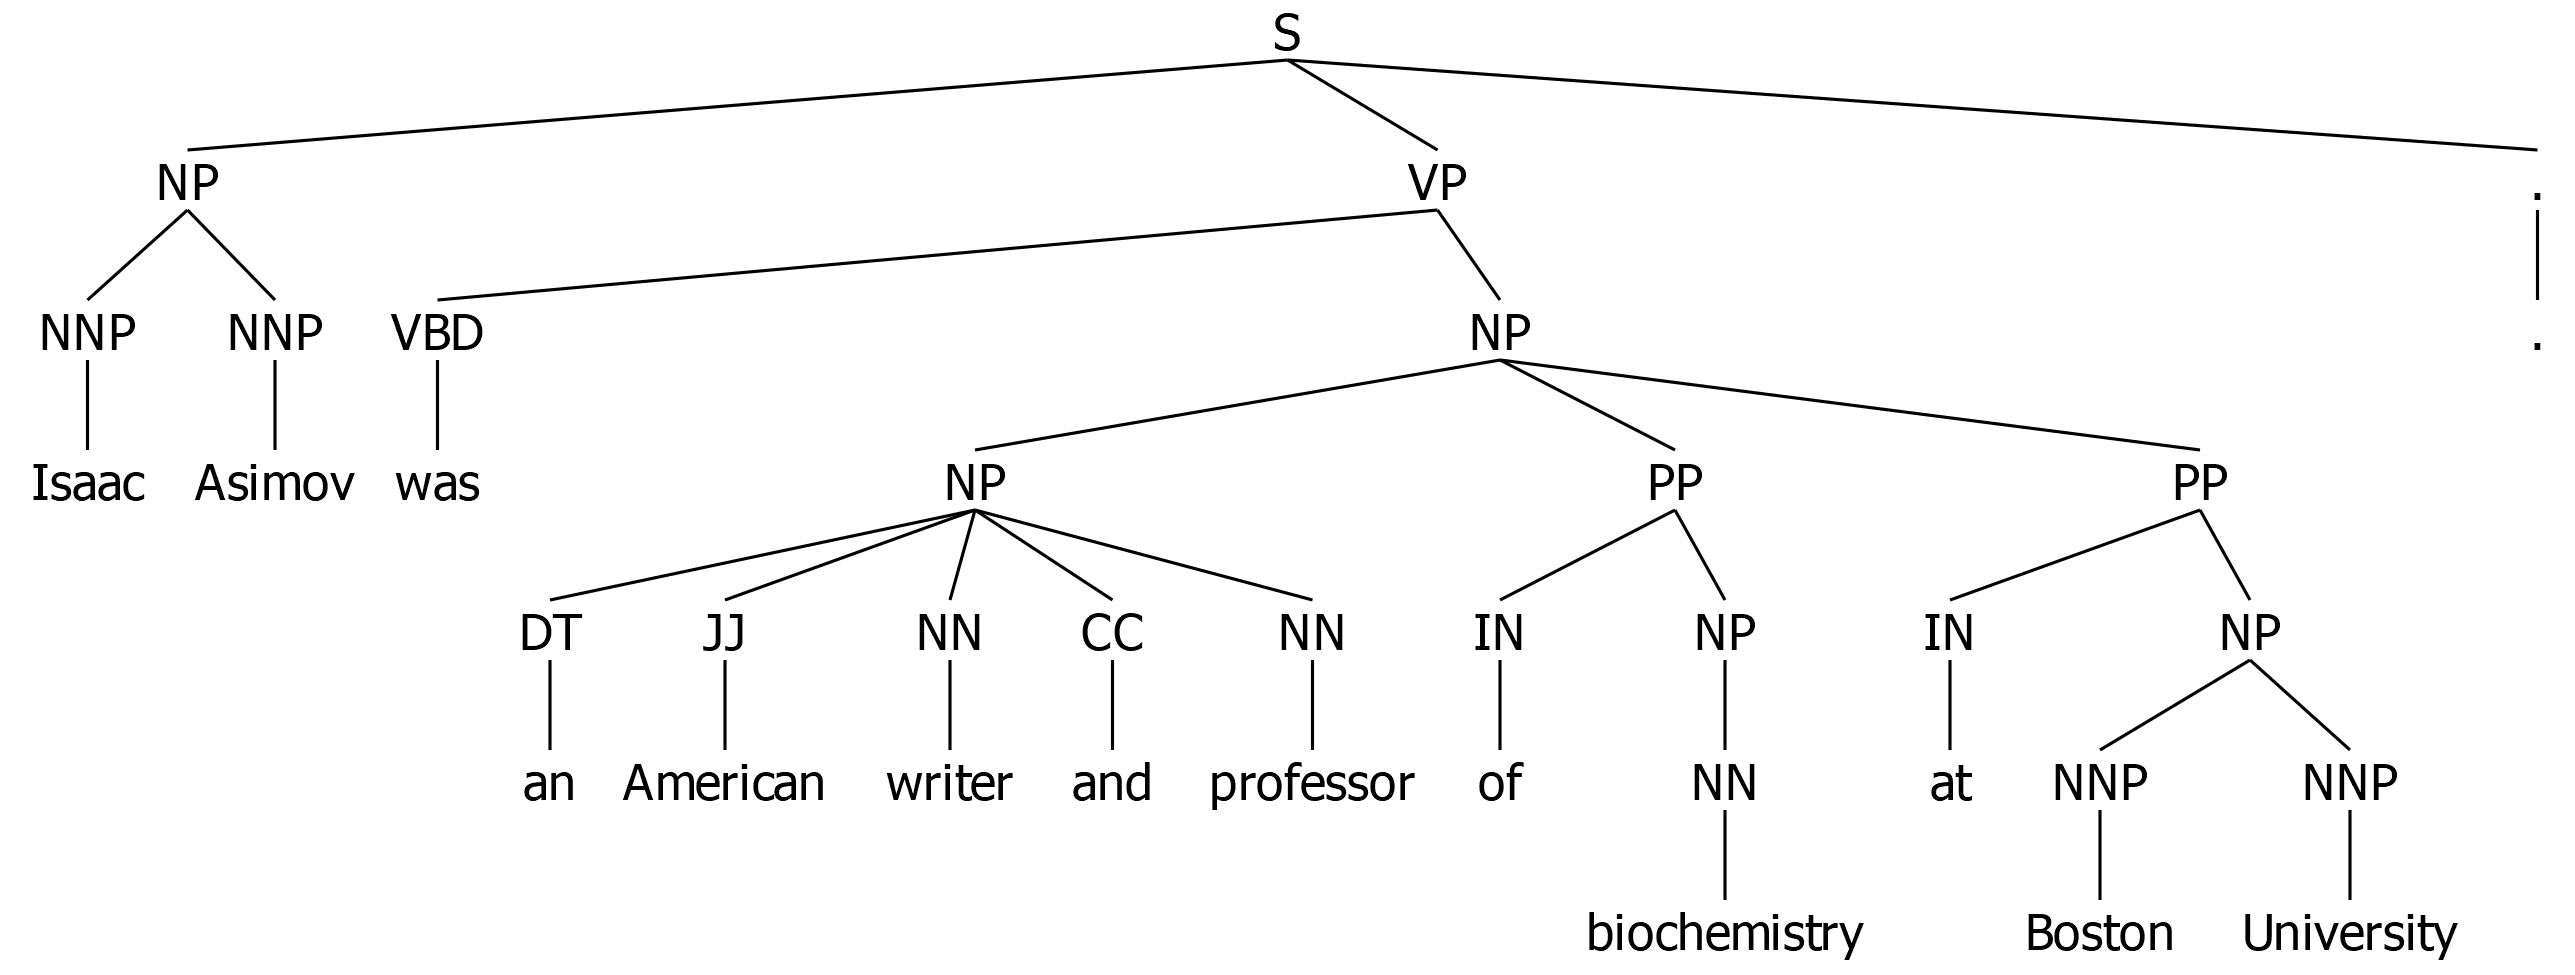 (S
  (NP (NNP Isaac) (NNP Asimov))
  (VP
    (VBD was)
    (NP
      (NP (DT an) (JJ American) (NN writer) (CC and) (NN professor))
      (PP (IN of) (NP (NN biochemistry)))
      (PP (IN at) (NP (NNP Boston) (NNP University)))))
  (. .))